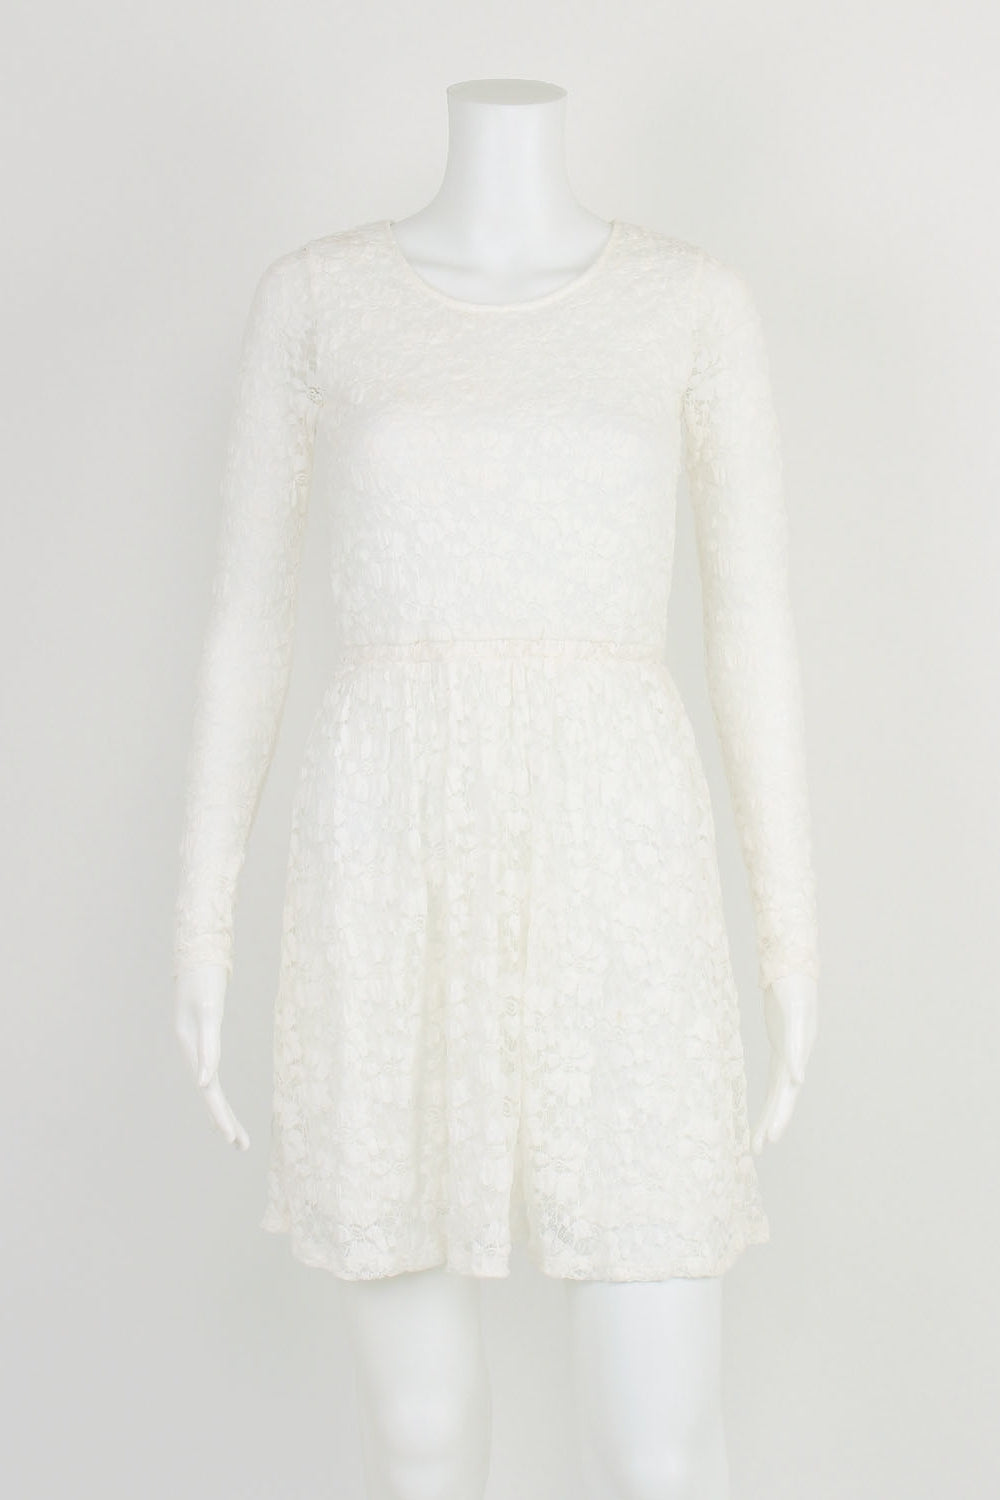 Topshop White Lace Dress 6